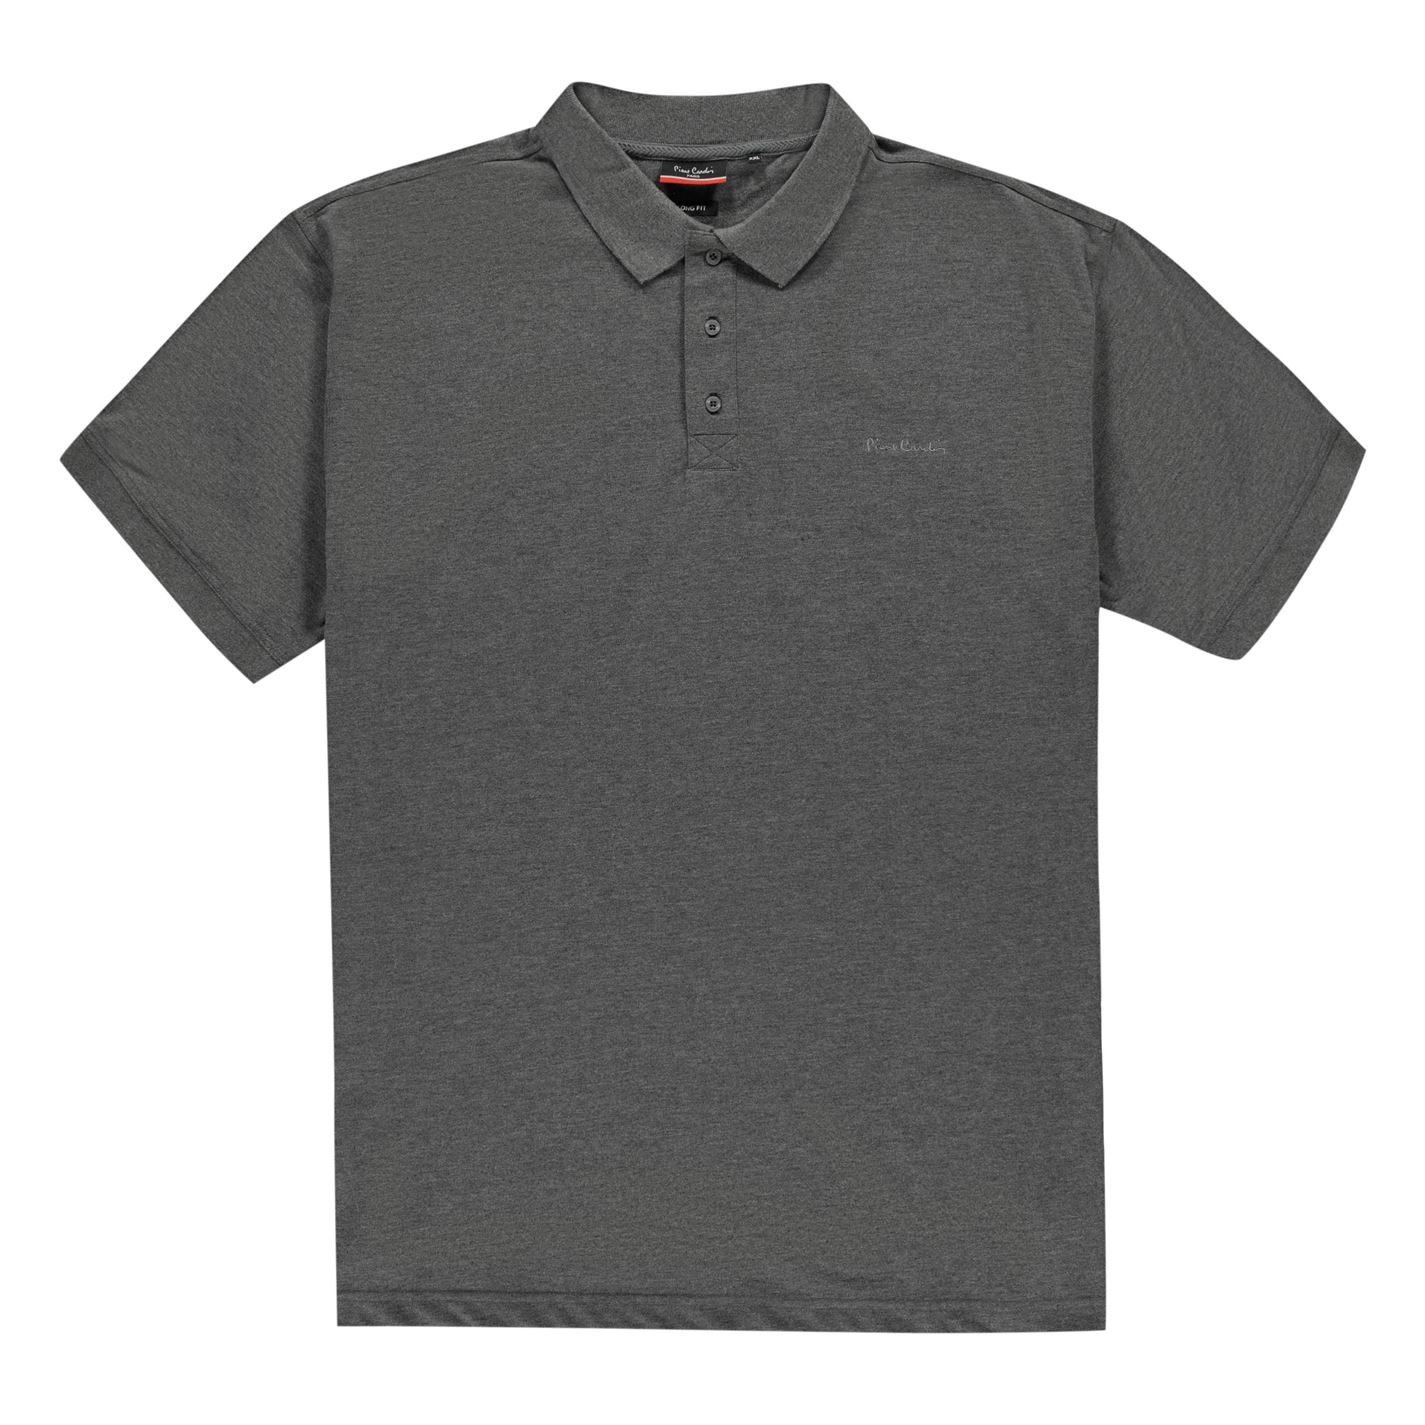 XL Plain Polohemd Herren Shorts sleeves3 button placket fastening